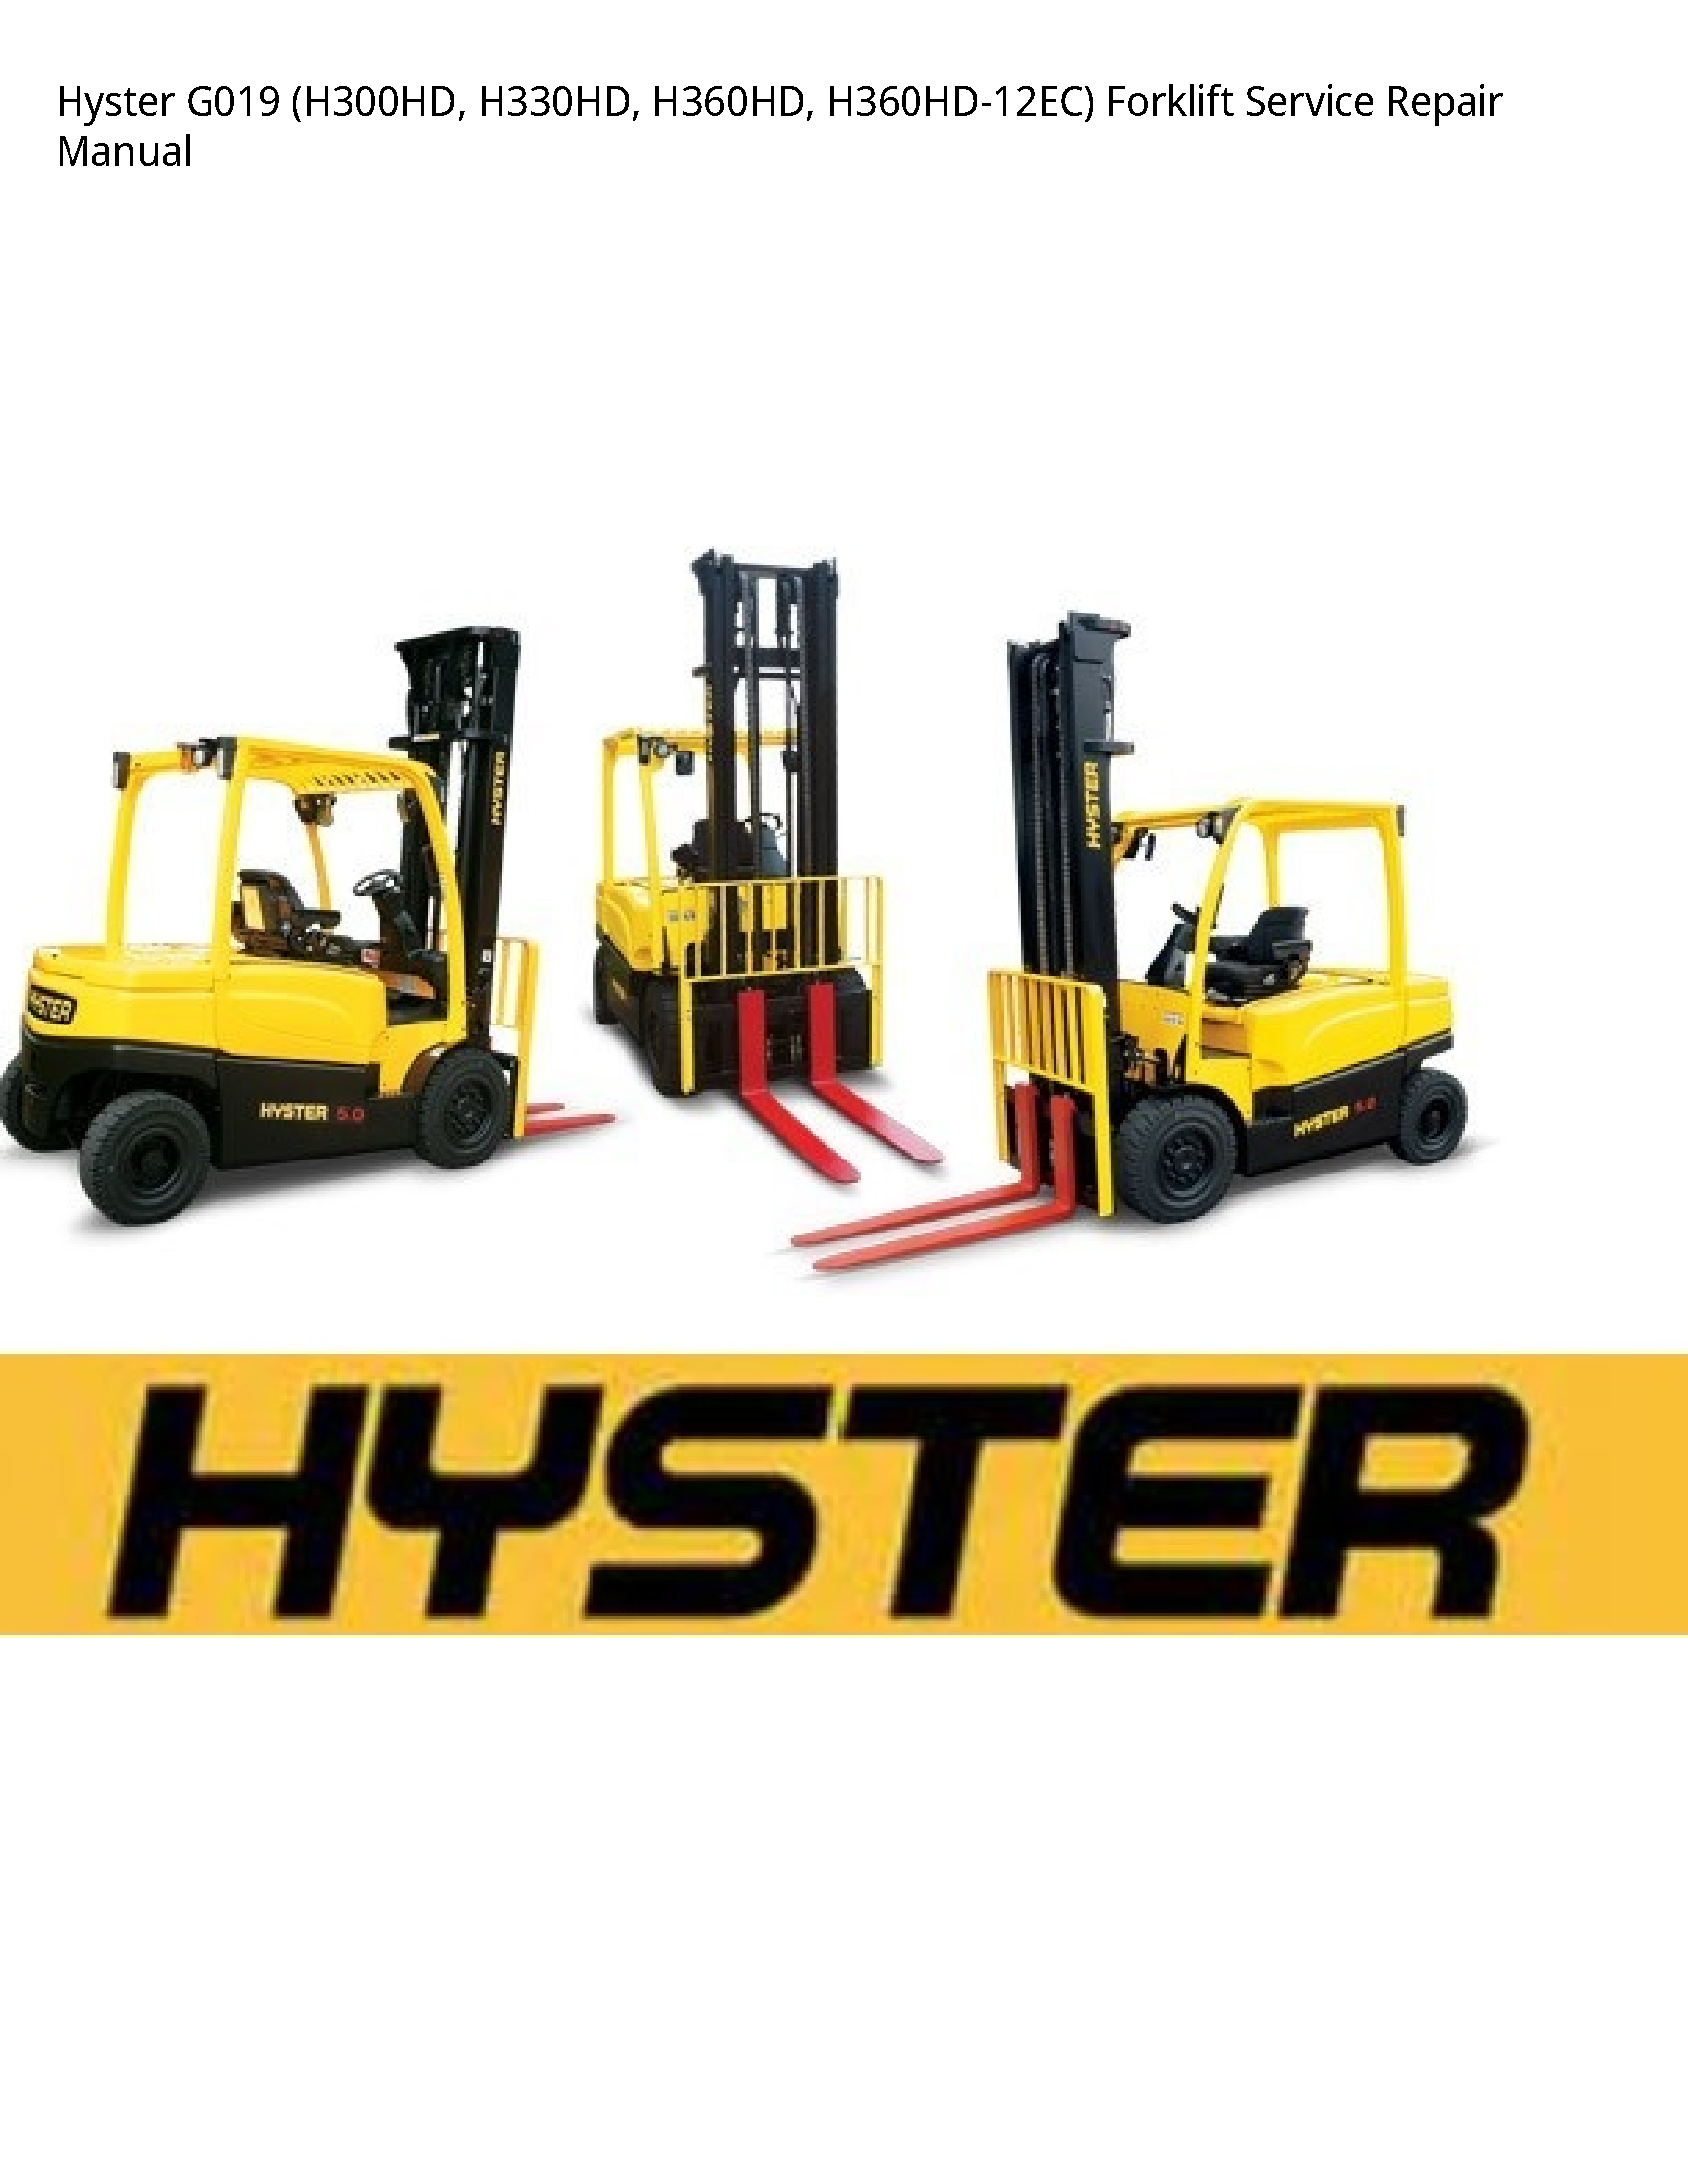 Hyster G019 Forklift manual